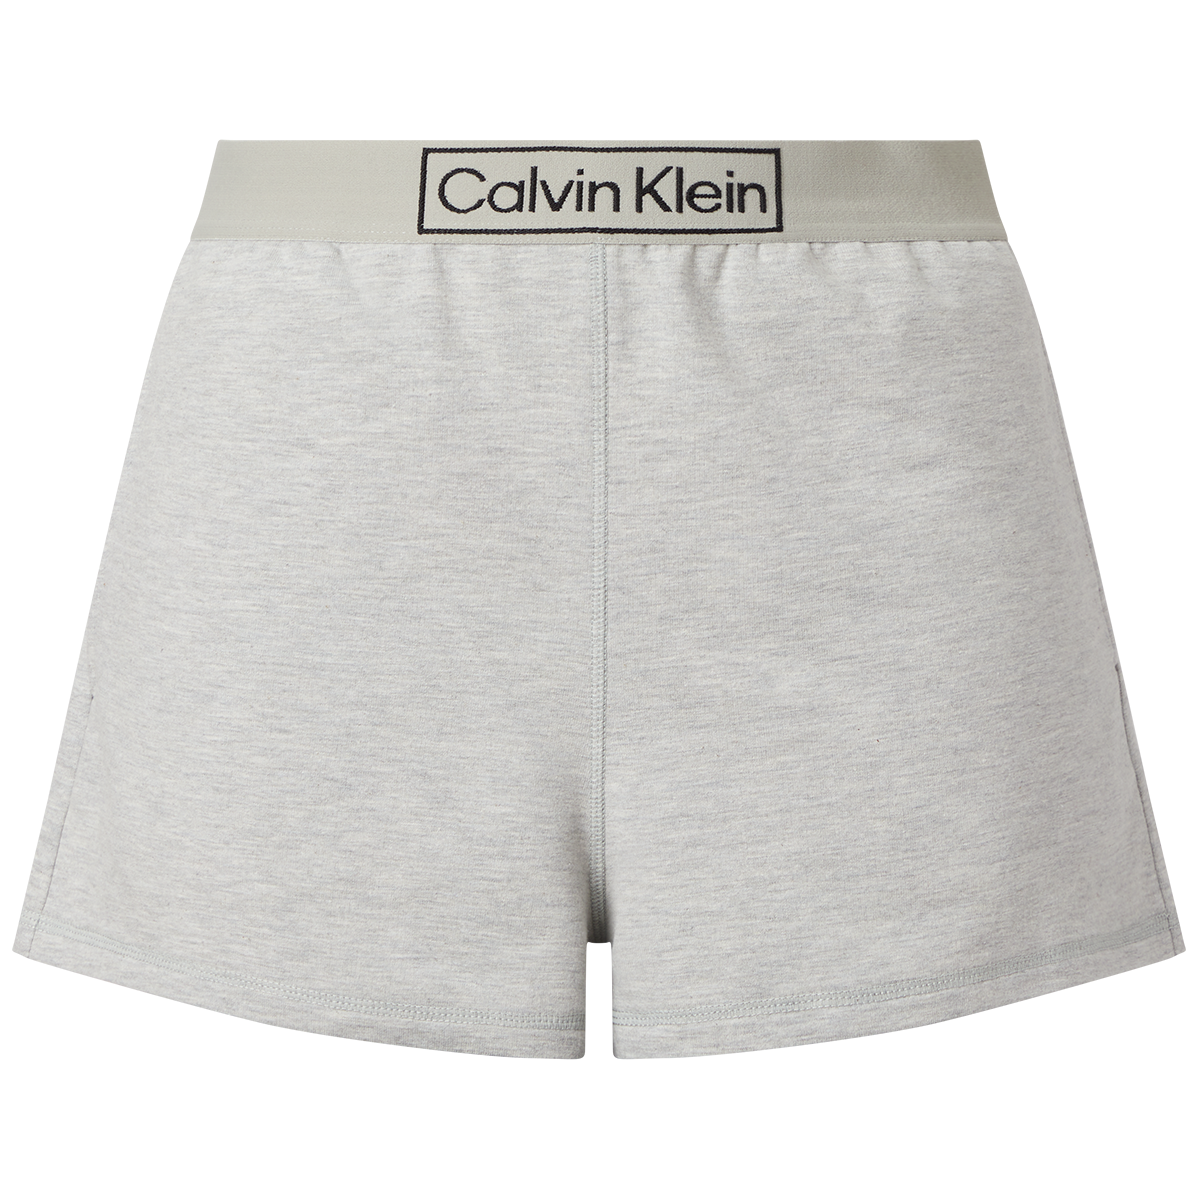 Calvin Klein Lingeri Shorts, Farve: Grå, Størrelse: L, Dame